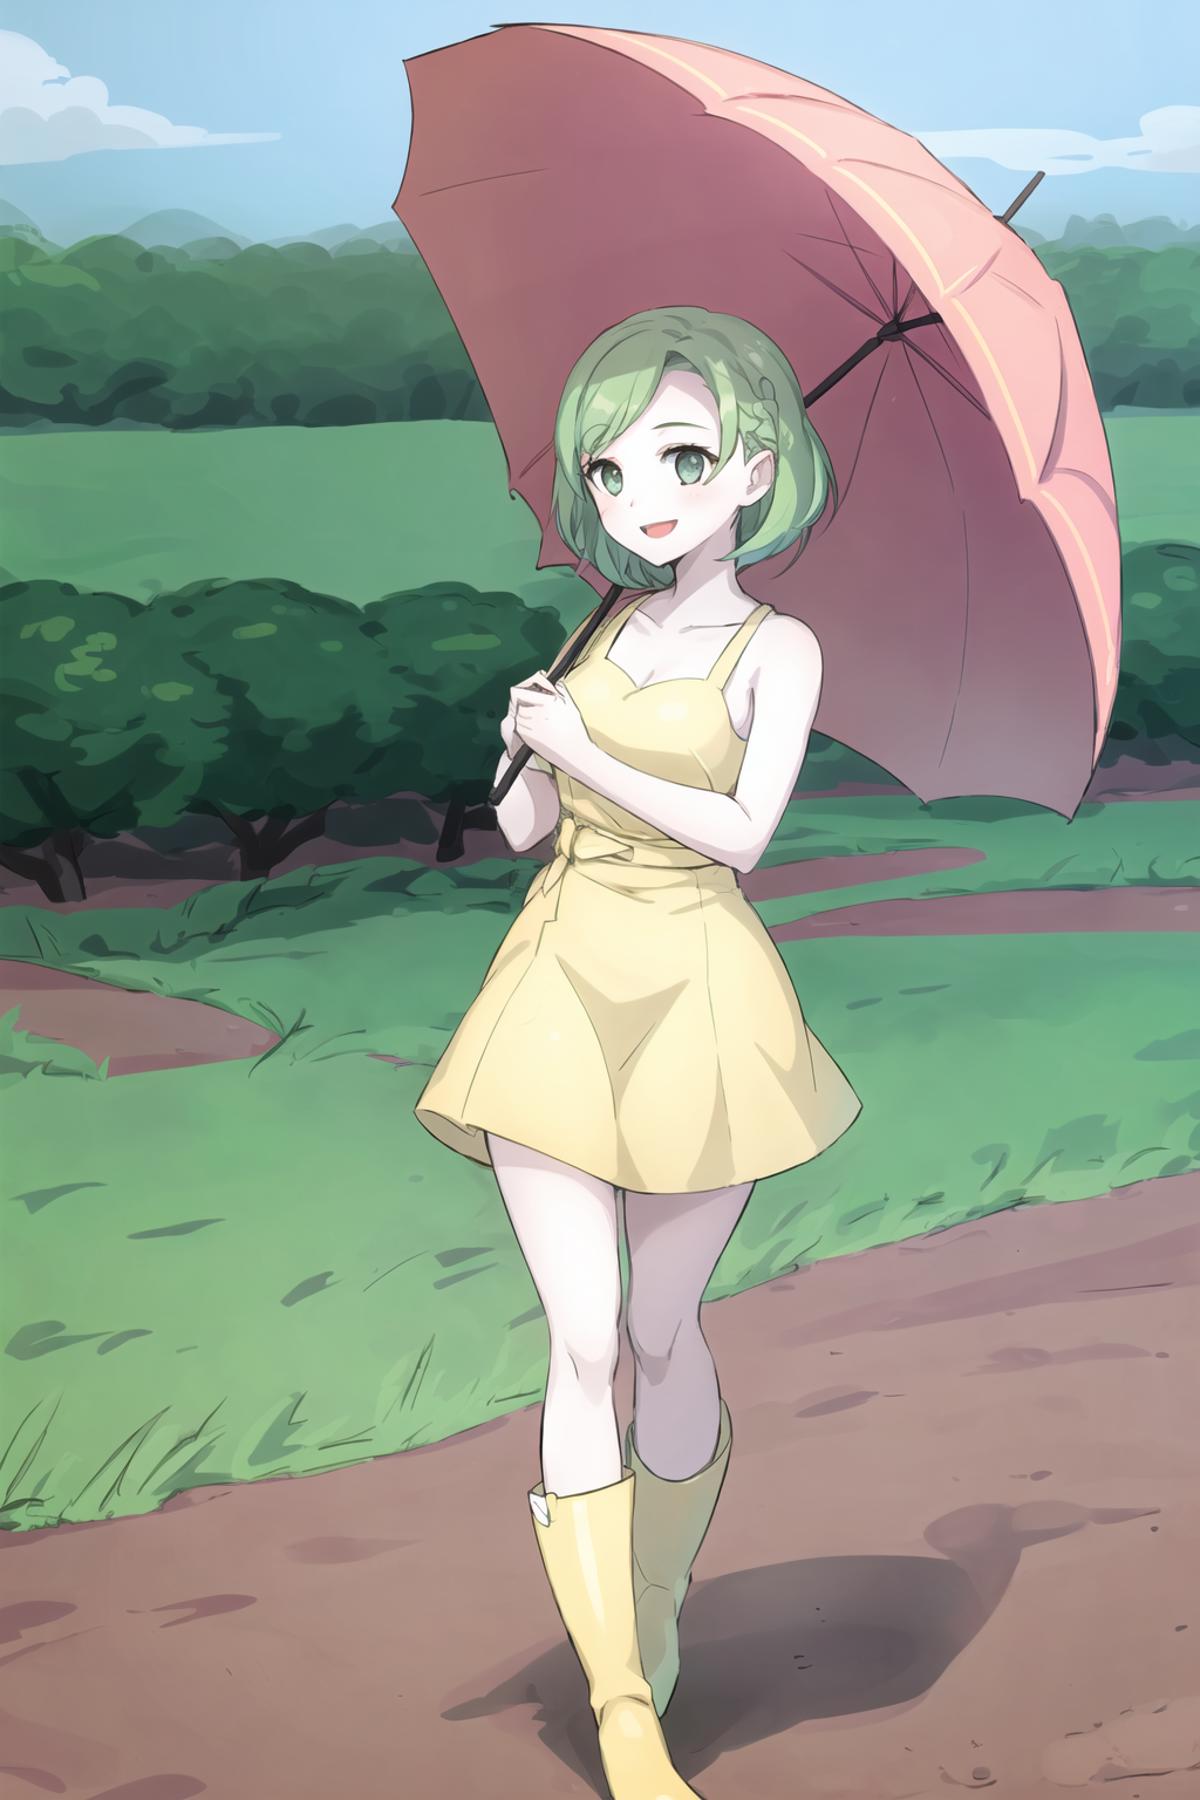 Parasol Lady (Pokemon) image by coileralt